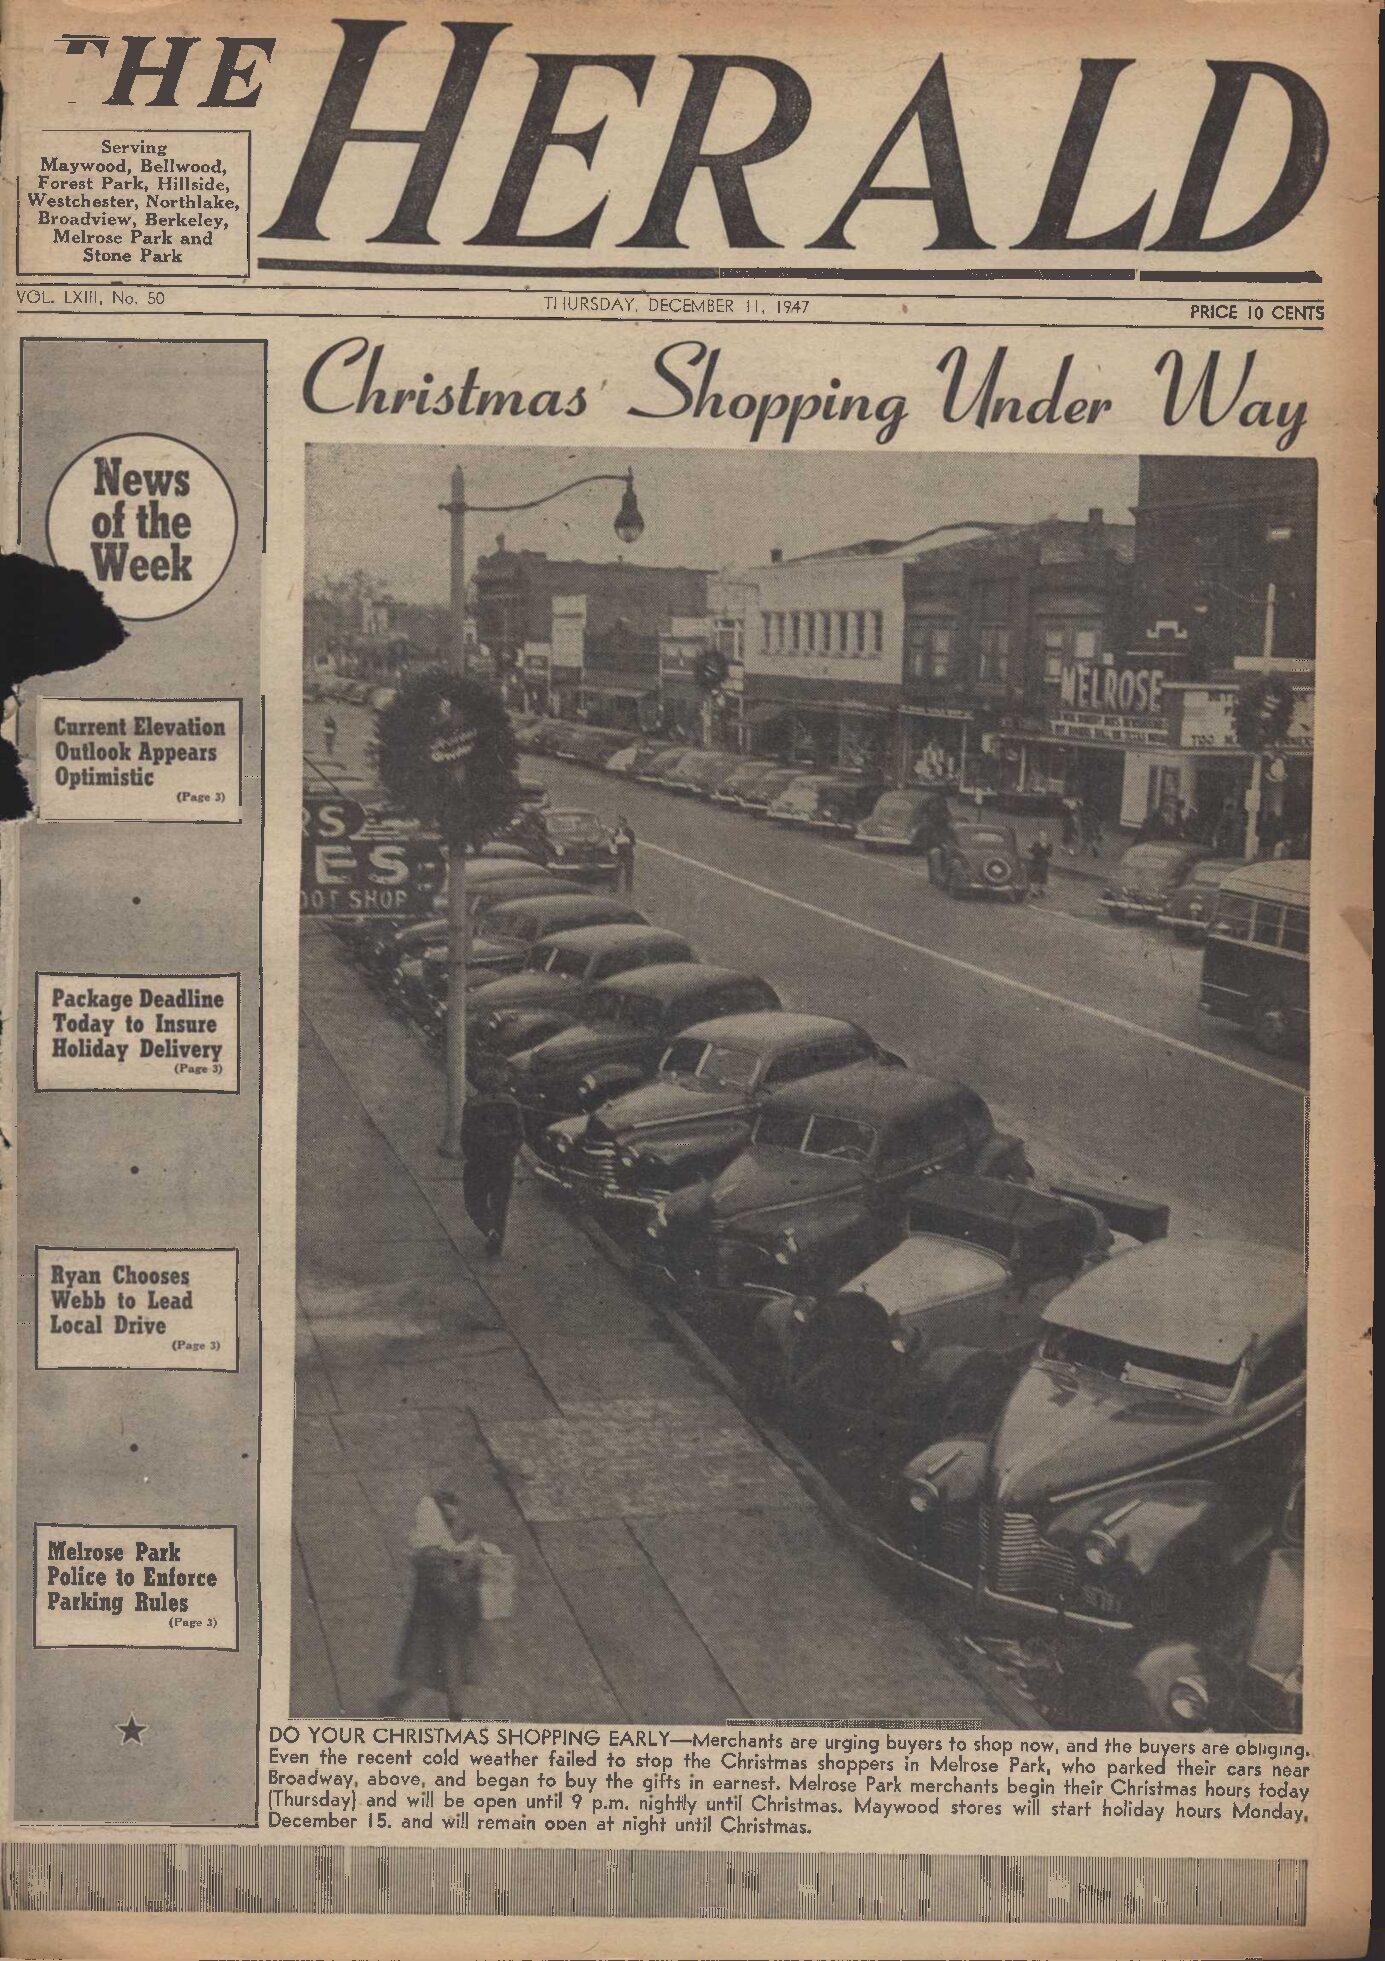 The Herald – 19471211